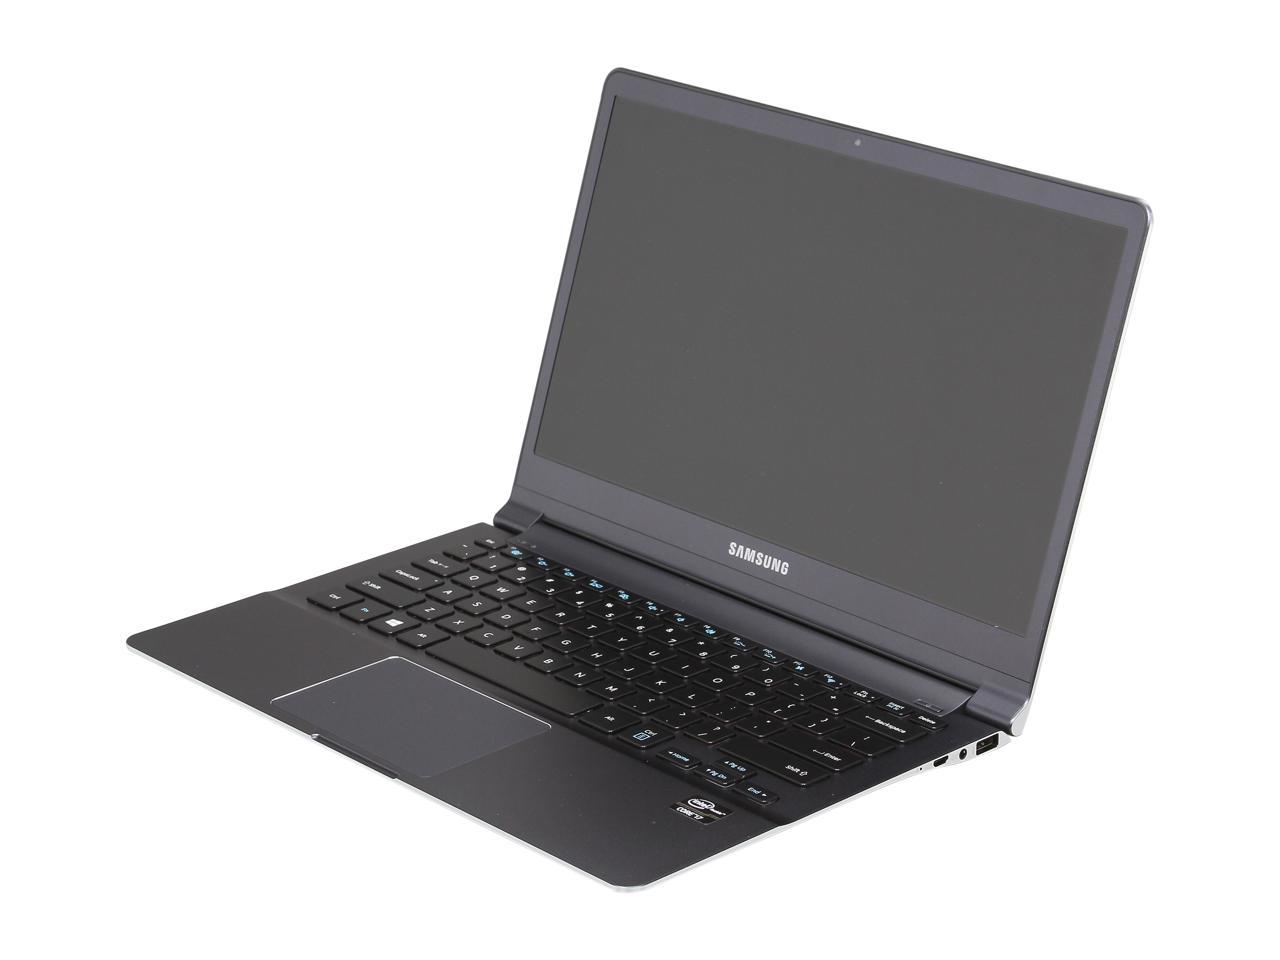 SAMSUNG Ultrabook Series 9 Intel Core i7 3rd Gen 3537U (2.00GHz) 4GB ...